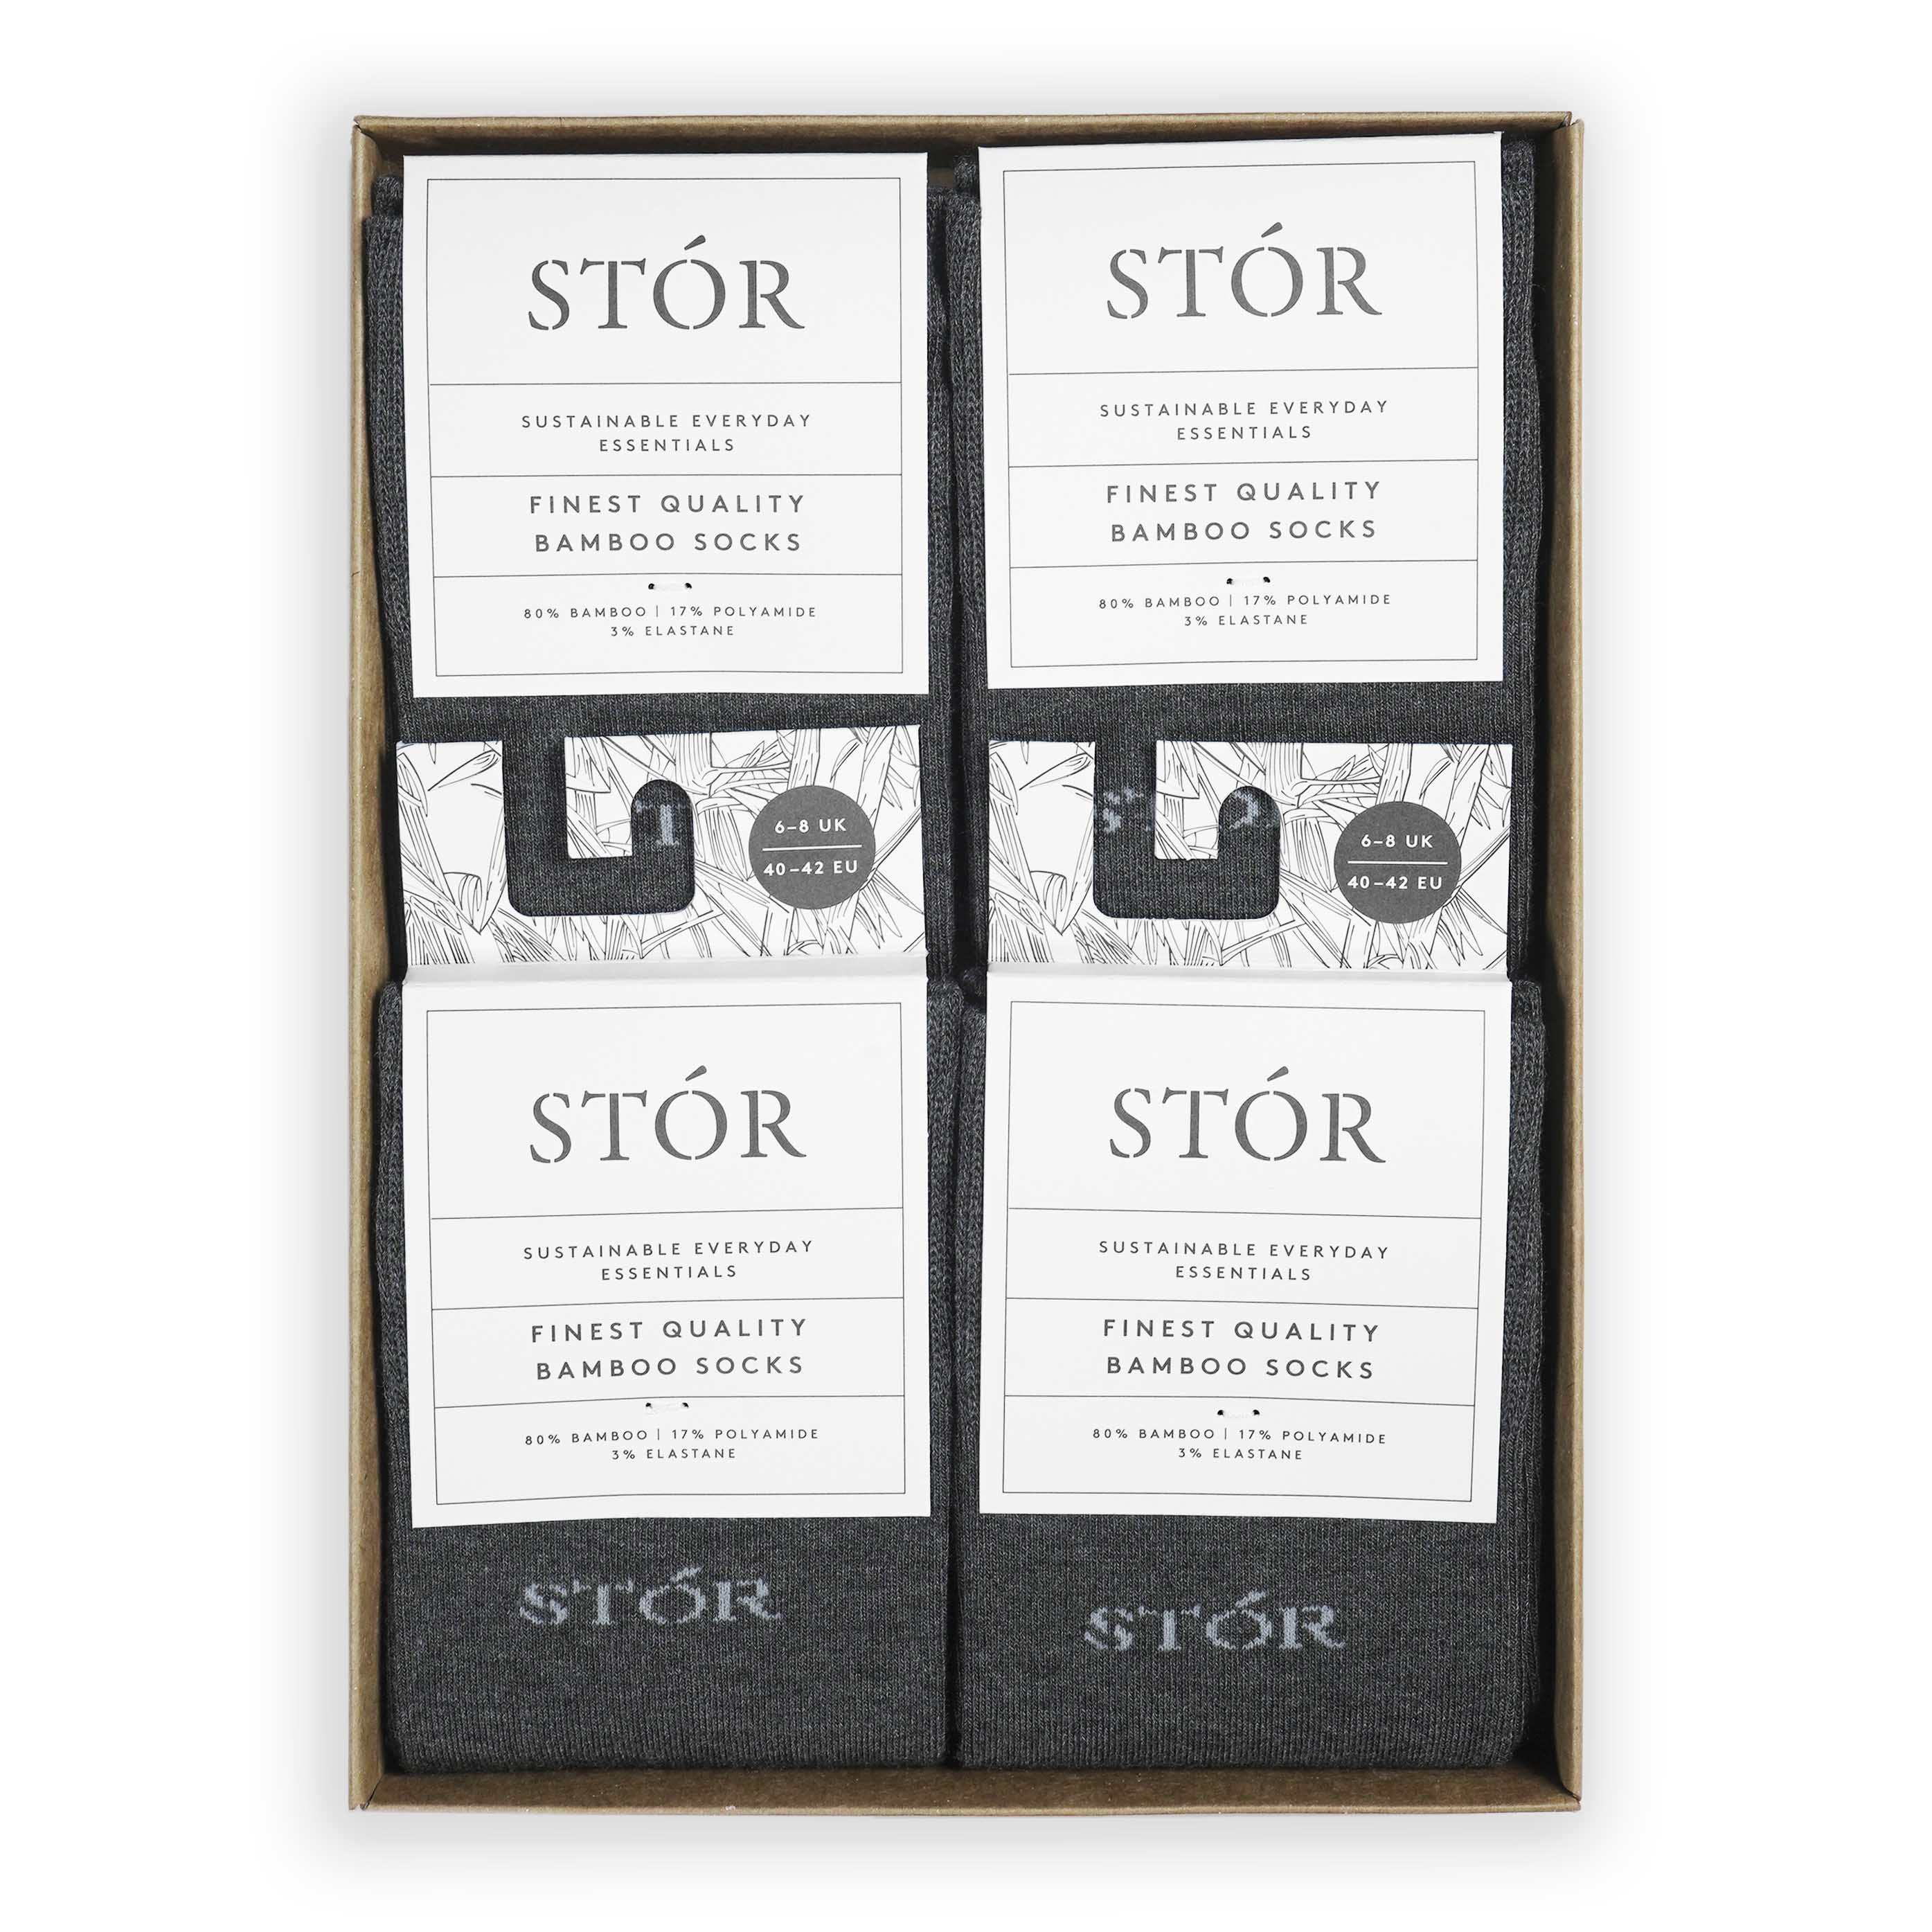 Sock Box Project - Grey x 4